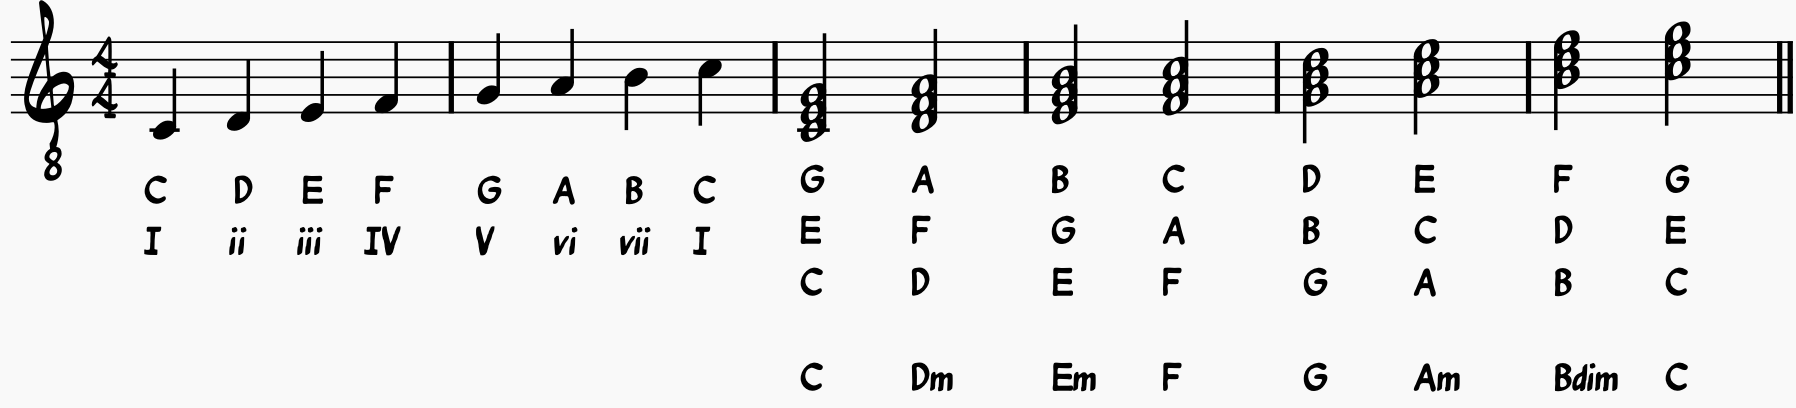 C major scale [C-D-E-F-G-A-B-C] as a scale and as a chord scale. 